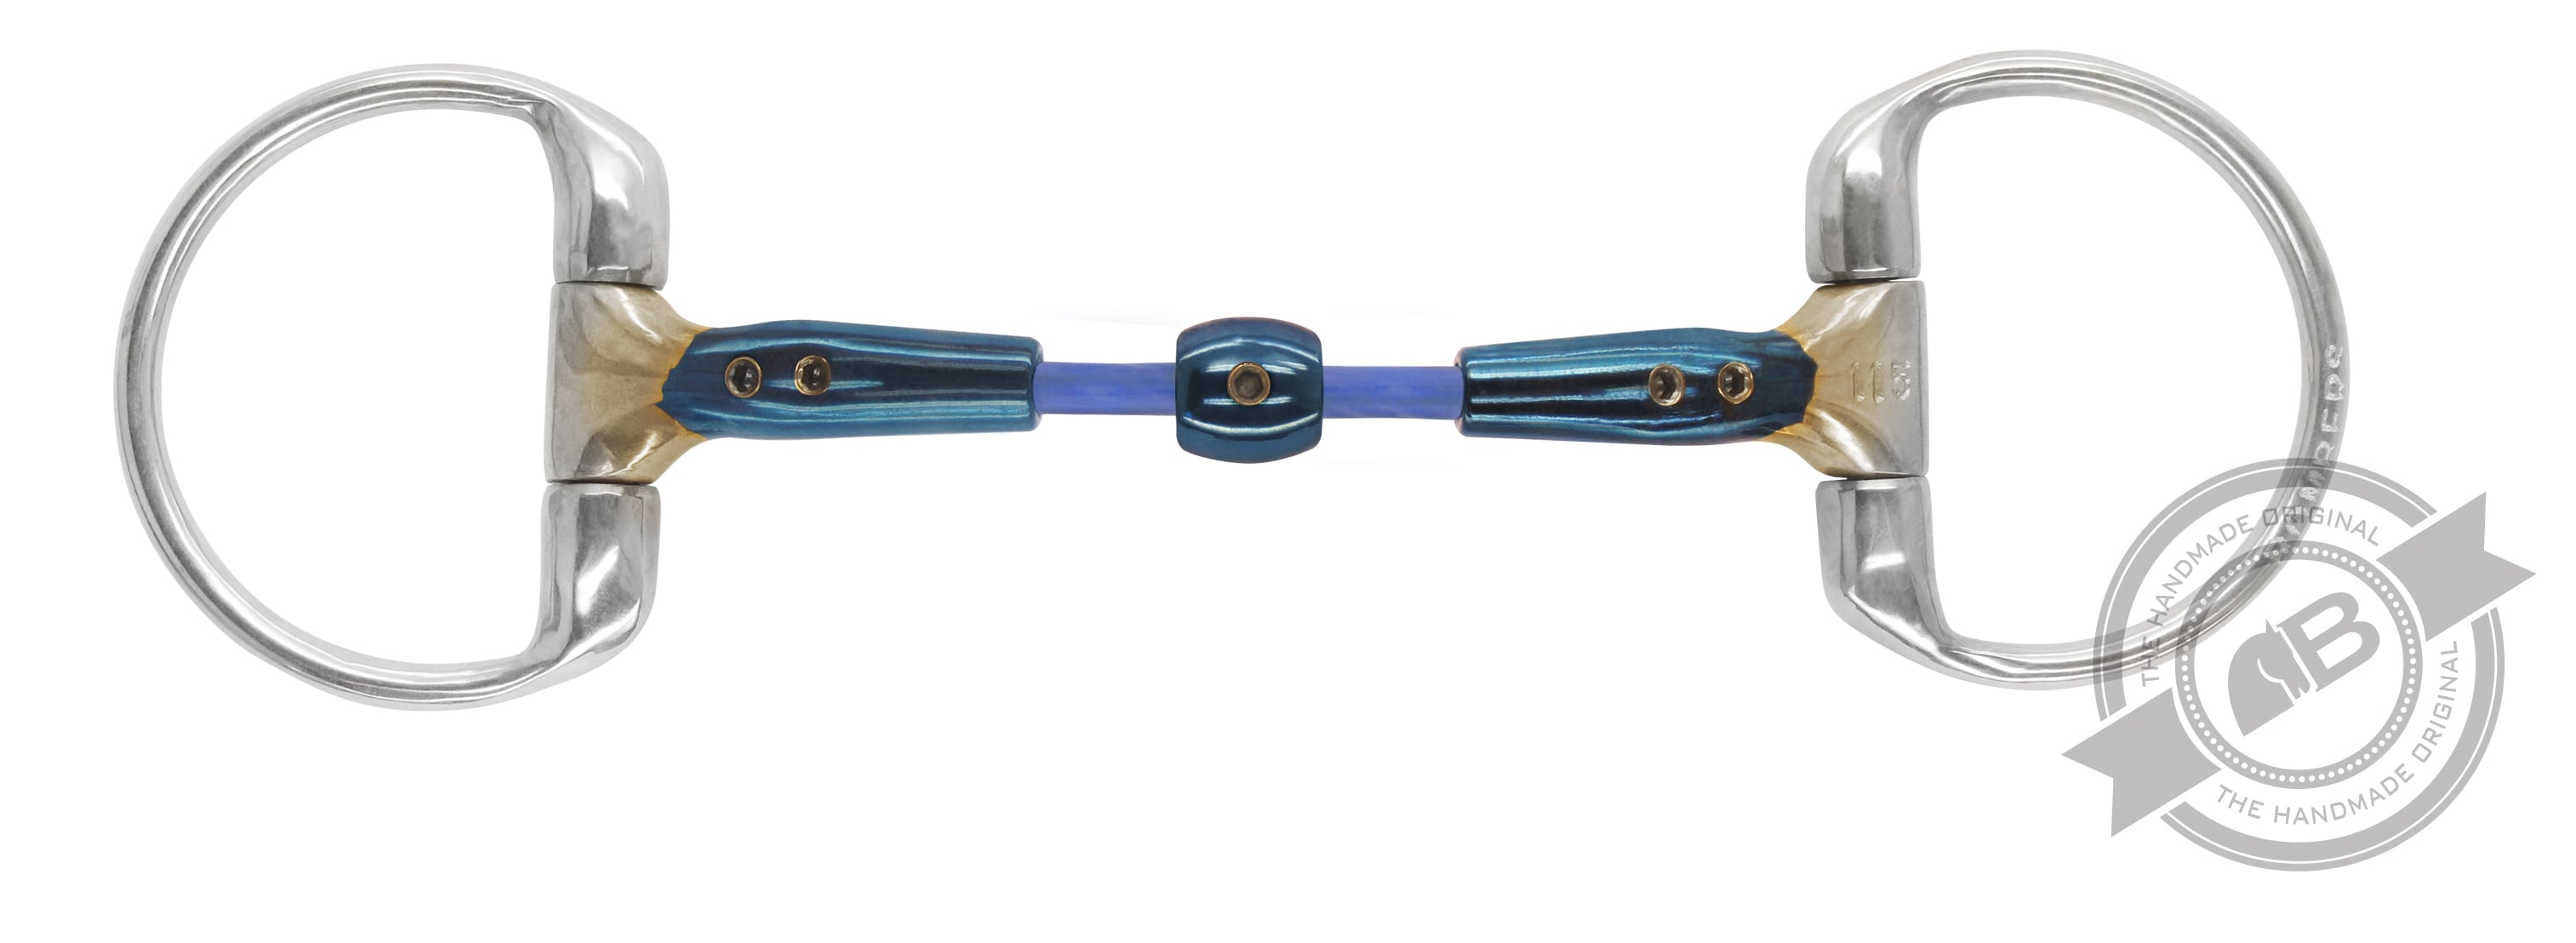 Eggbett Elliptical Cable - 12 mm